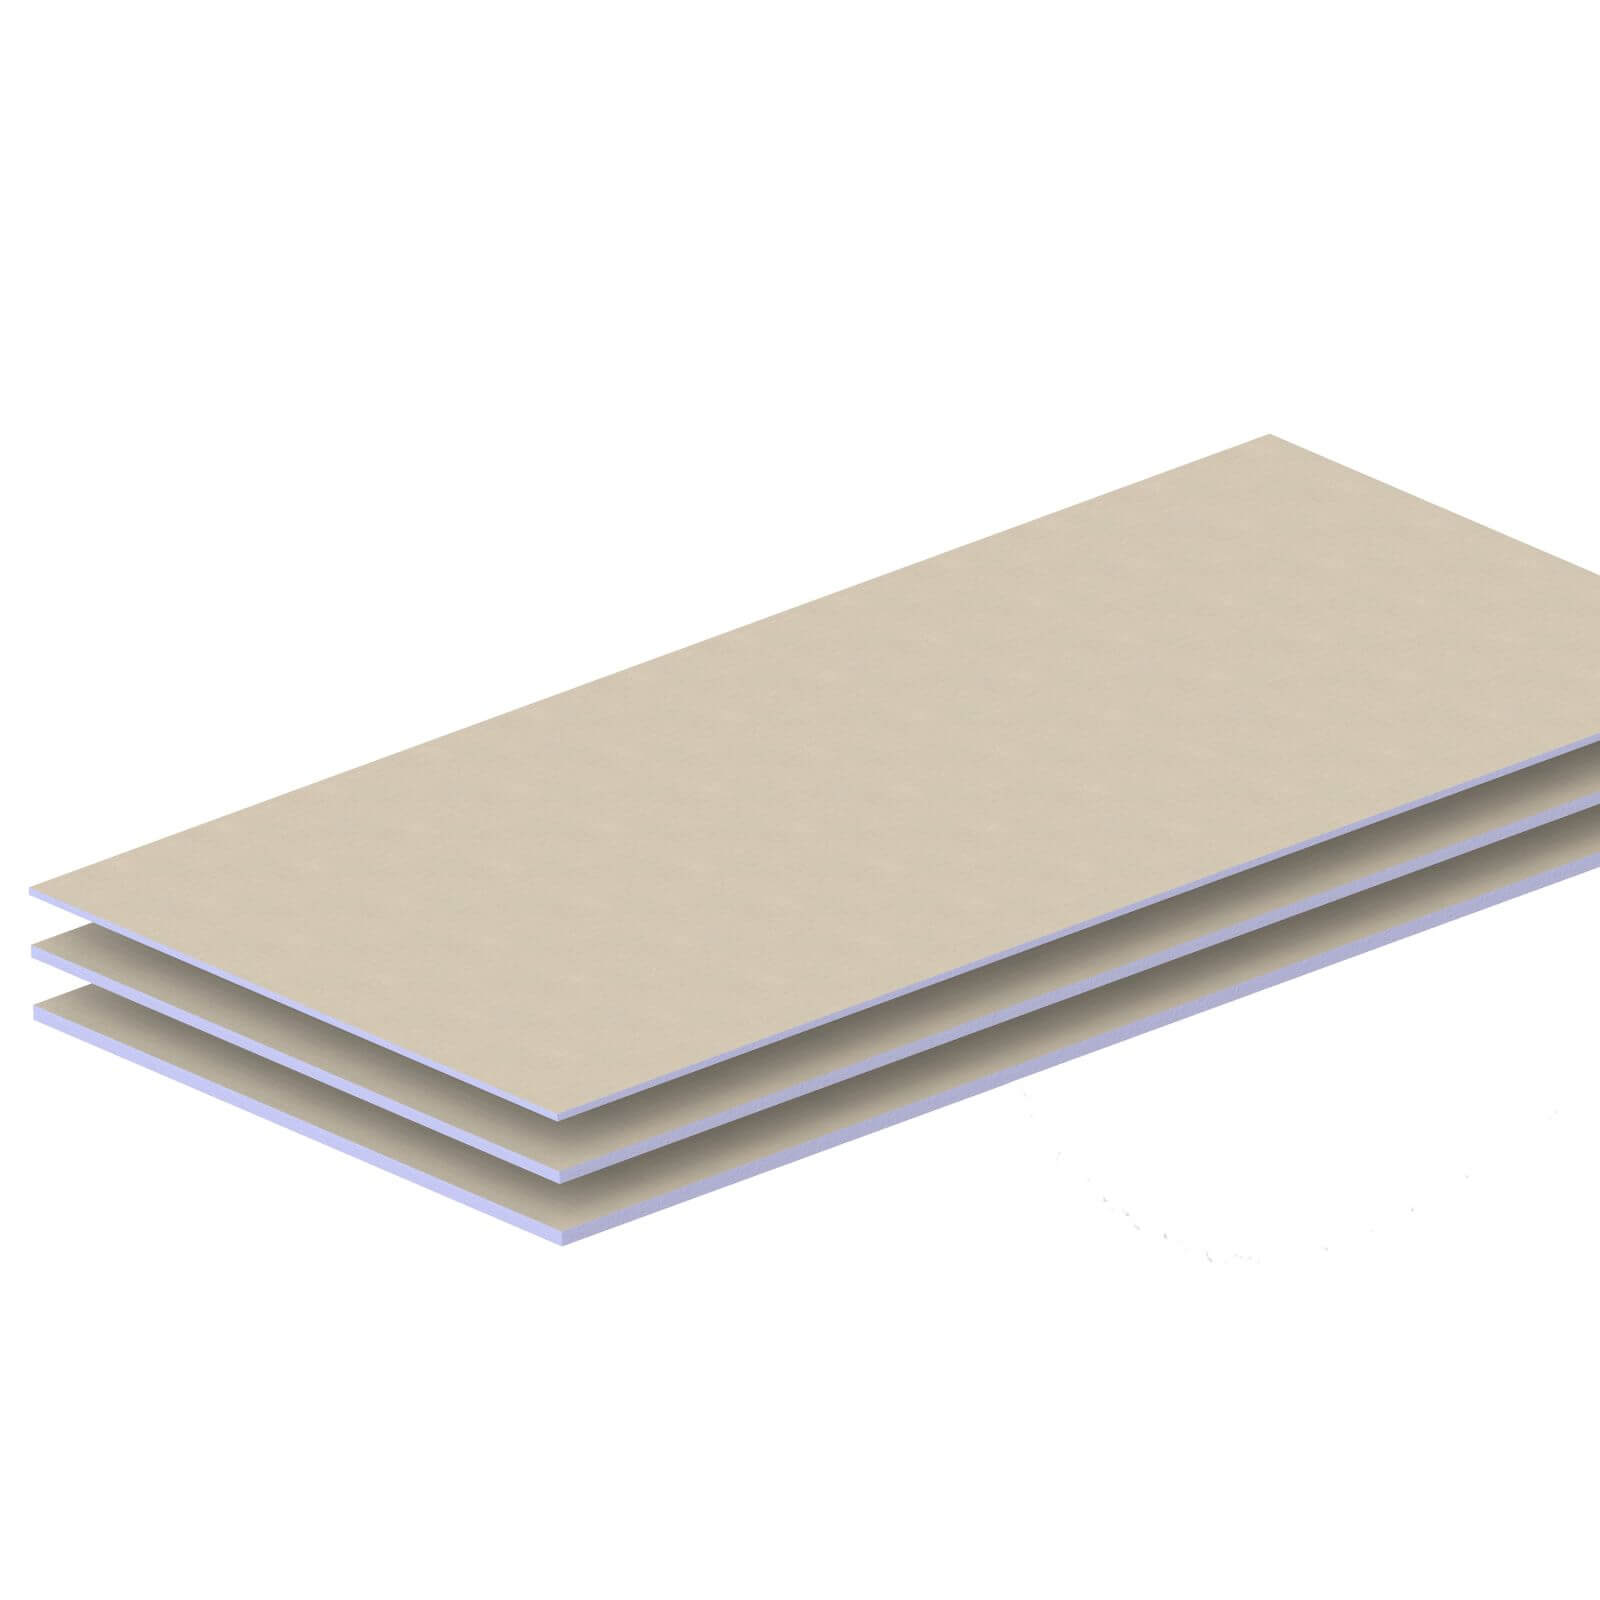 Tile Backer Board 1200 x 600 x 12mm | Homebase